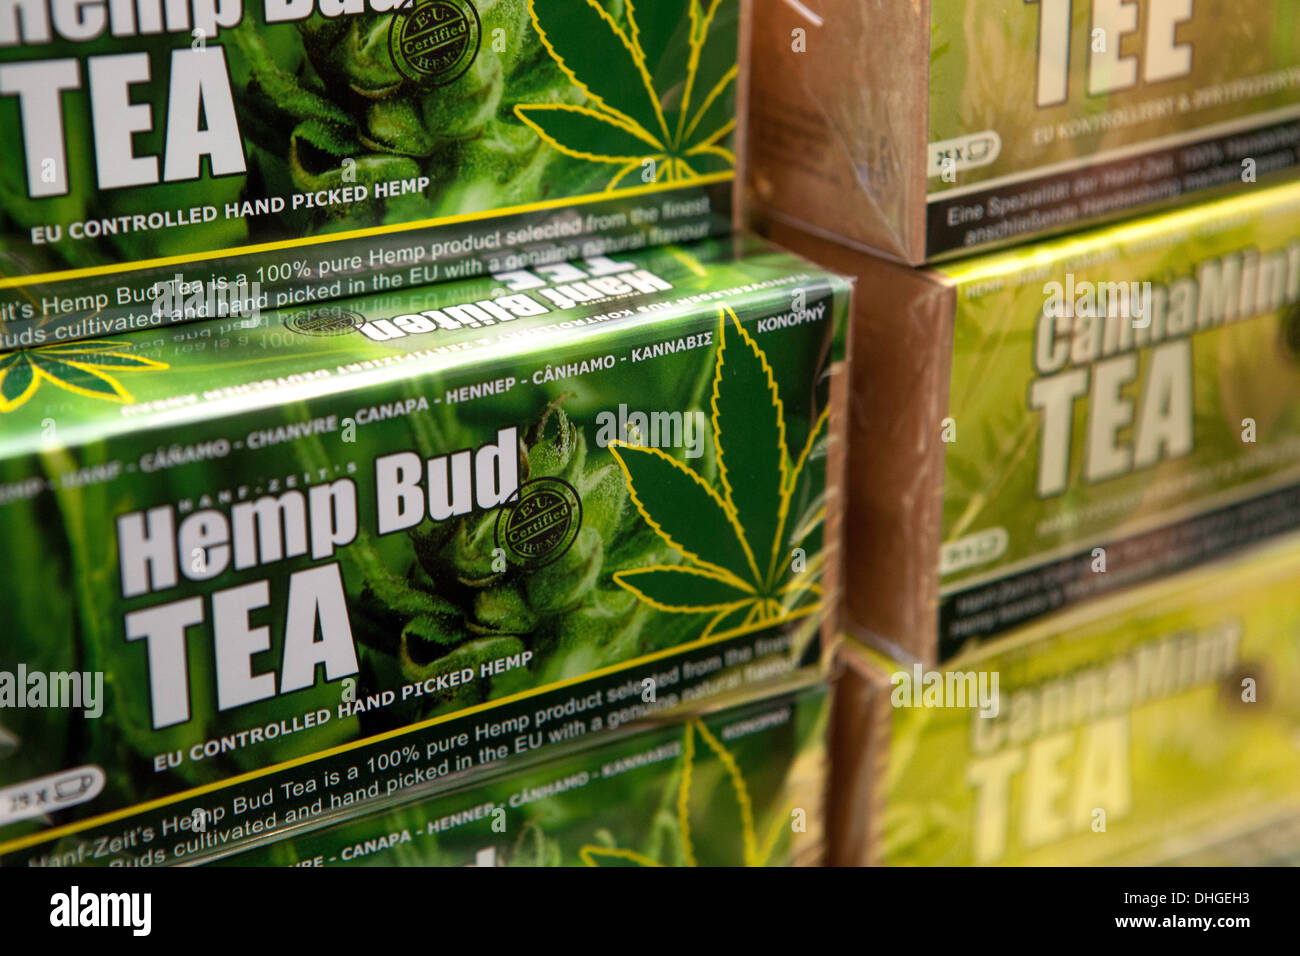 Hemp bud tea, hemp product Stock Photo